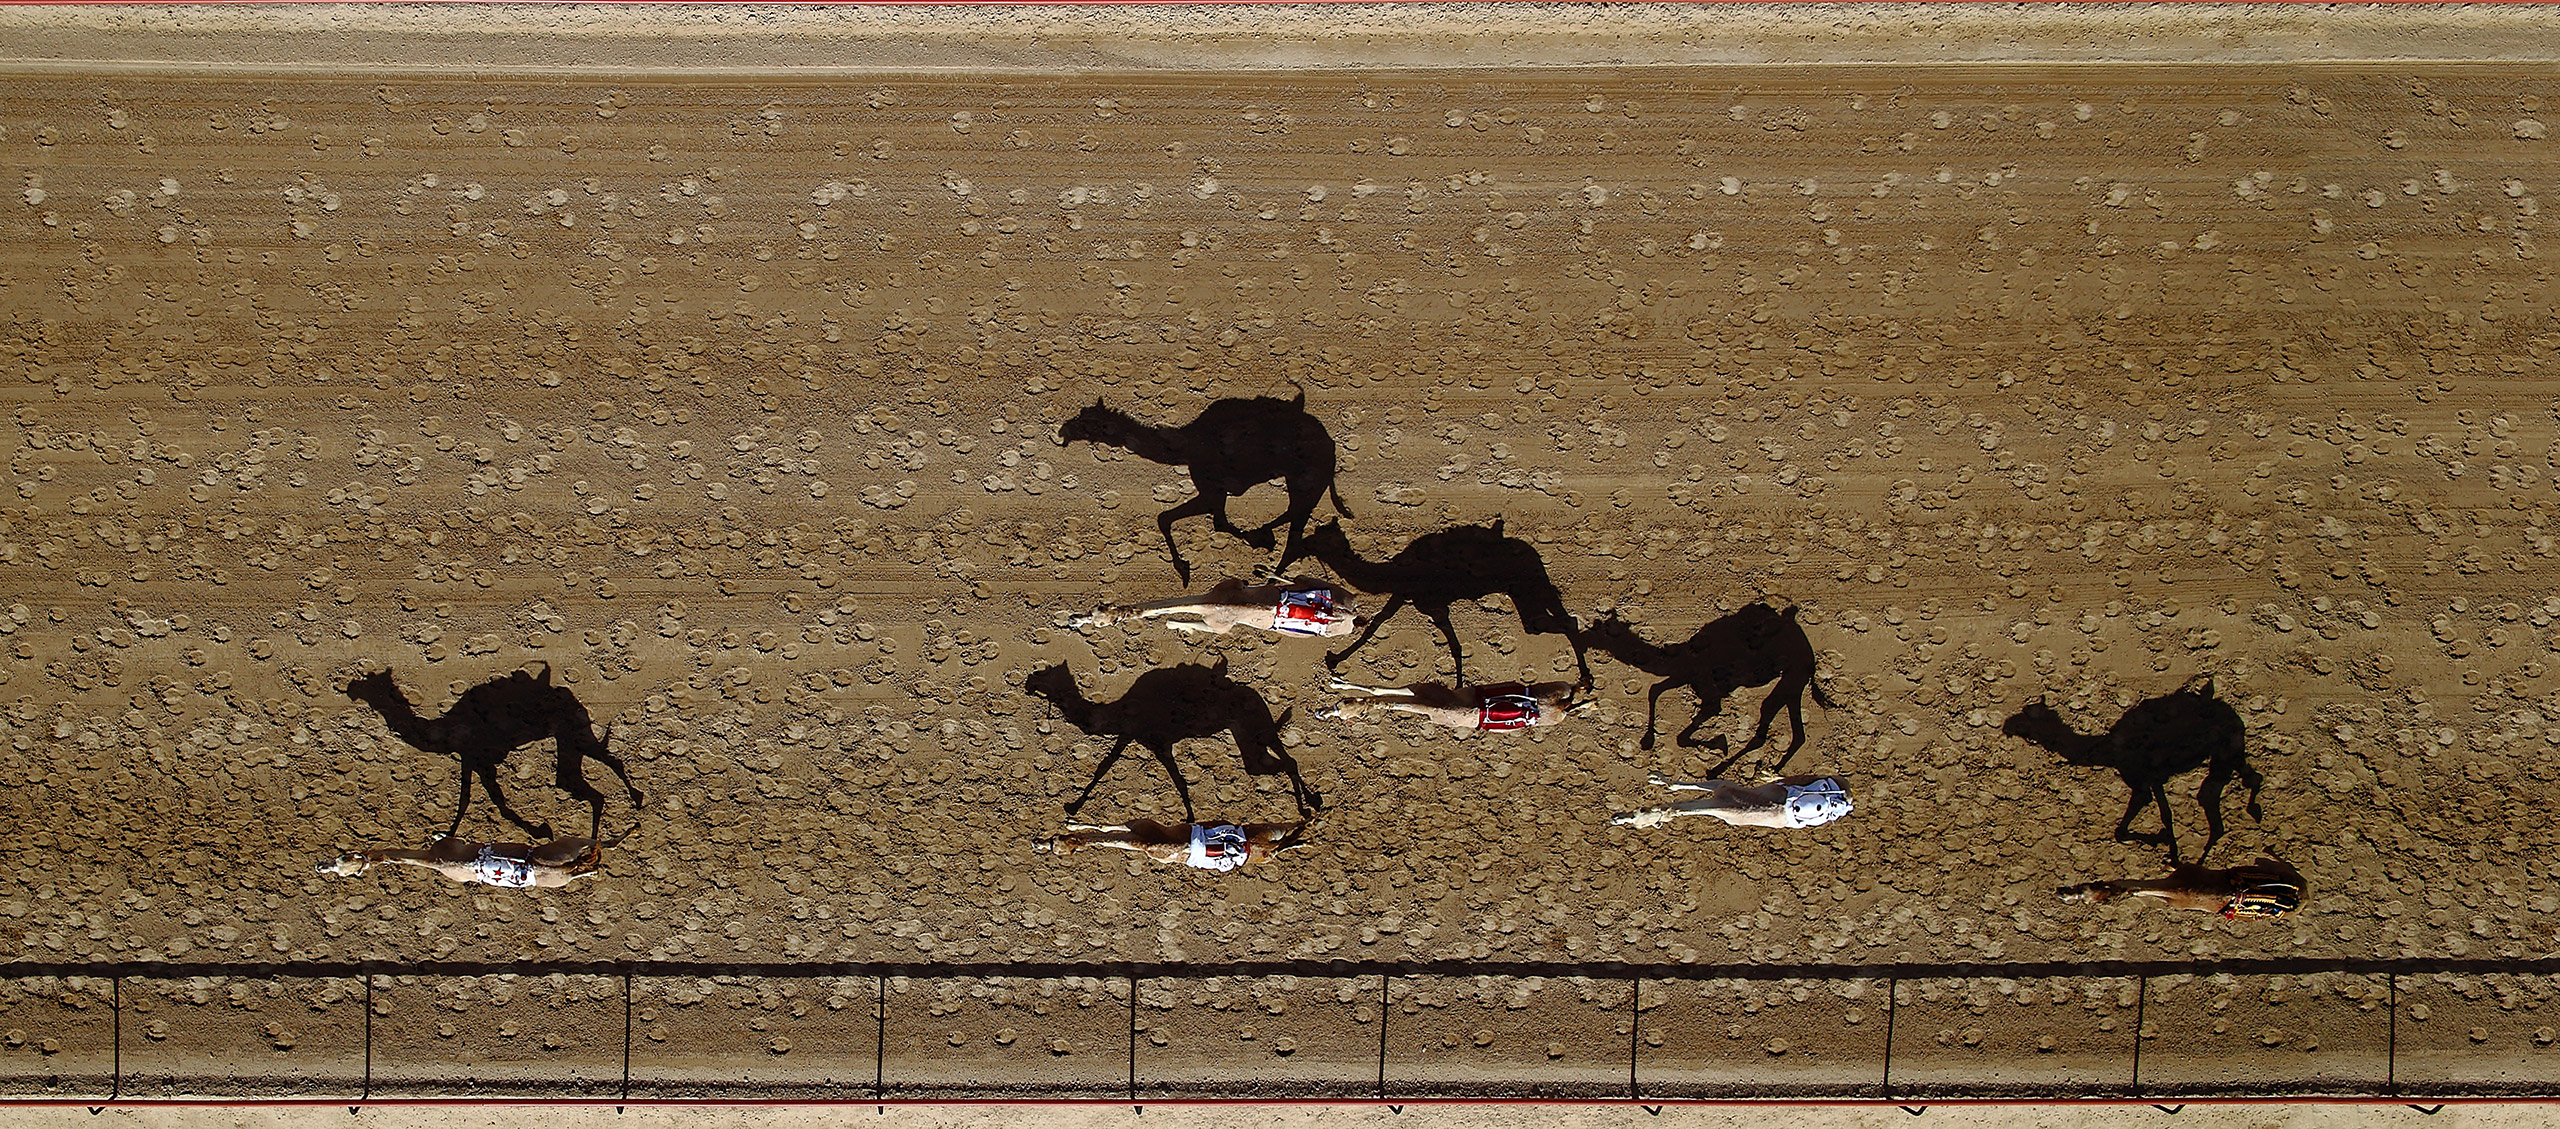 Al Marmoum Camel Racetrack, Dubai, United Arab Emirates